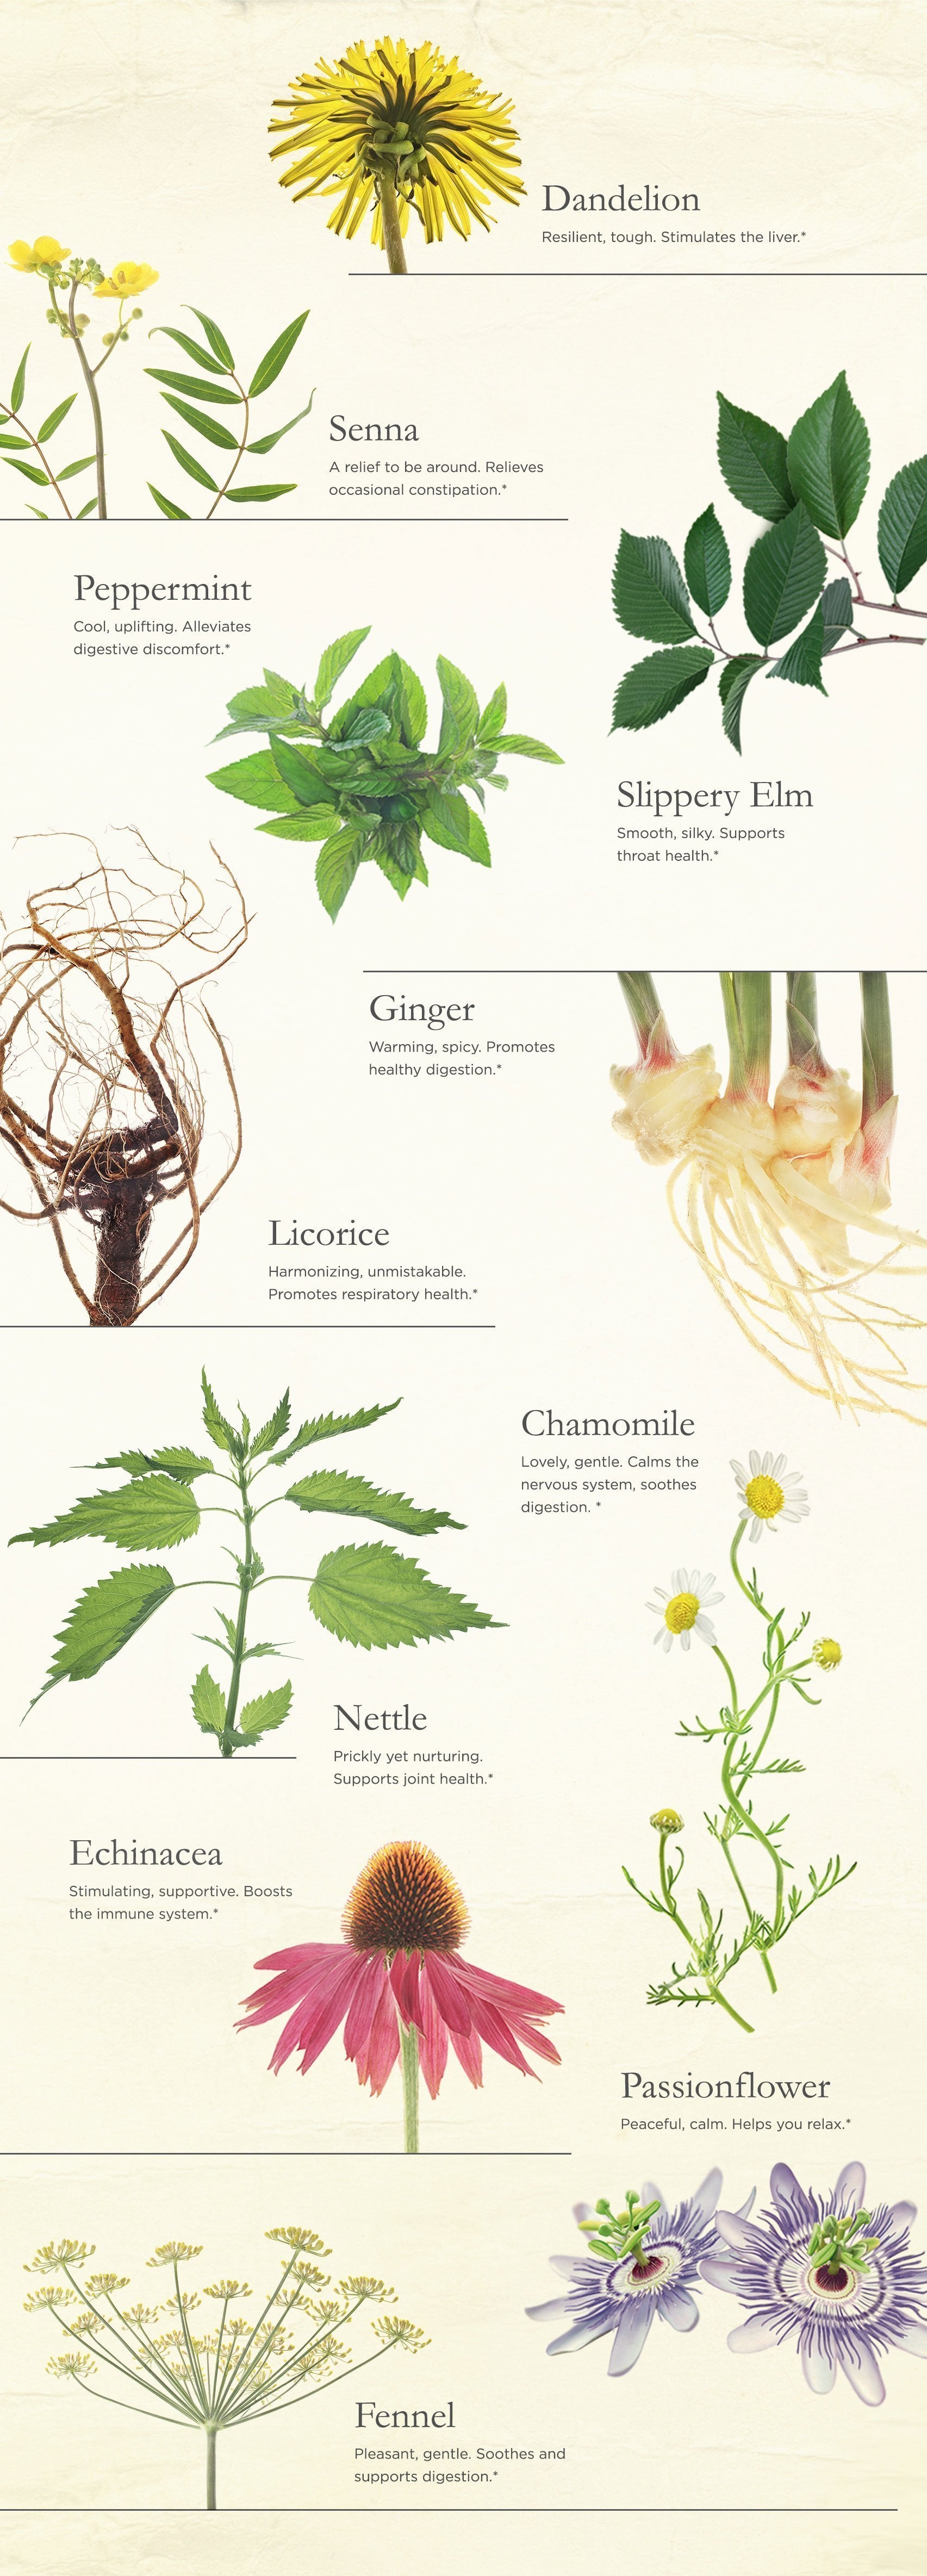 11 Plants for Wellness illustrations for plants